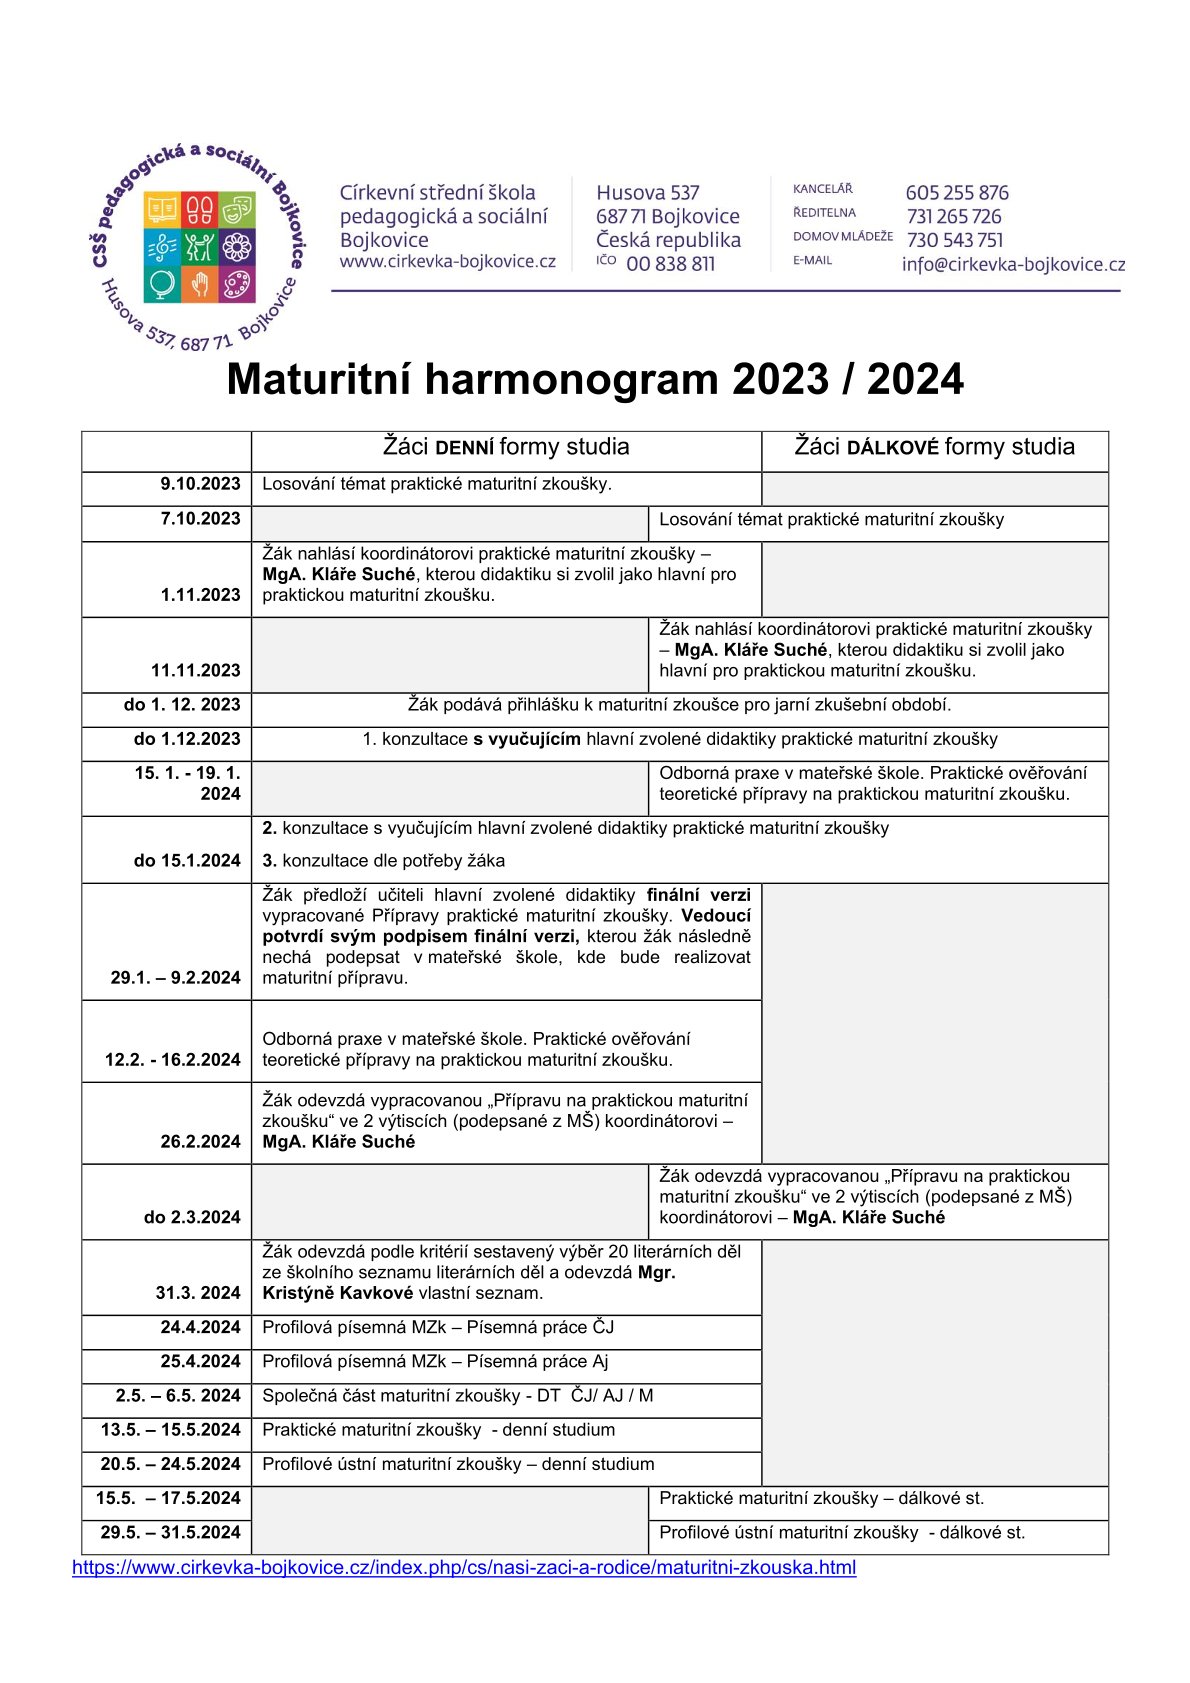 Maturitní harmonogram 2023 2024